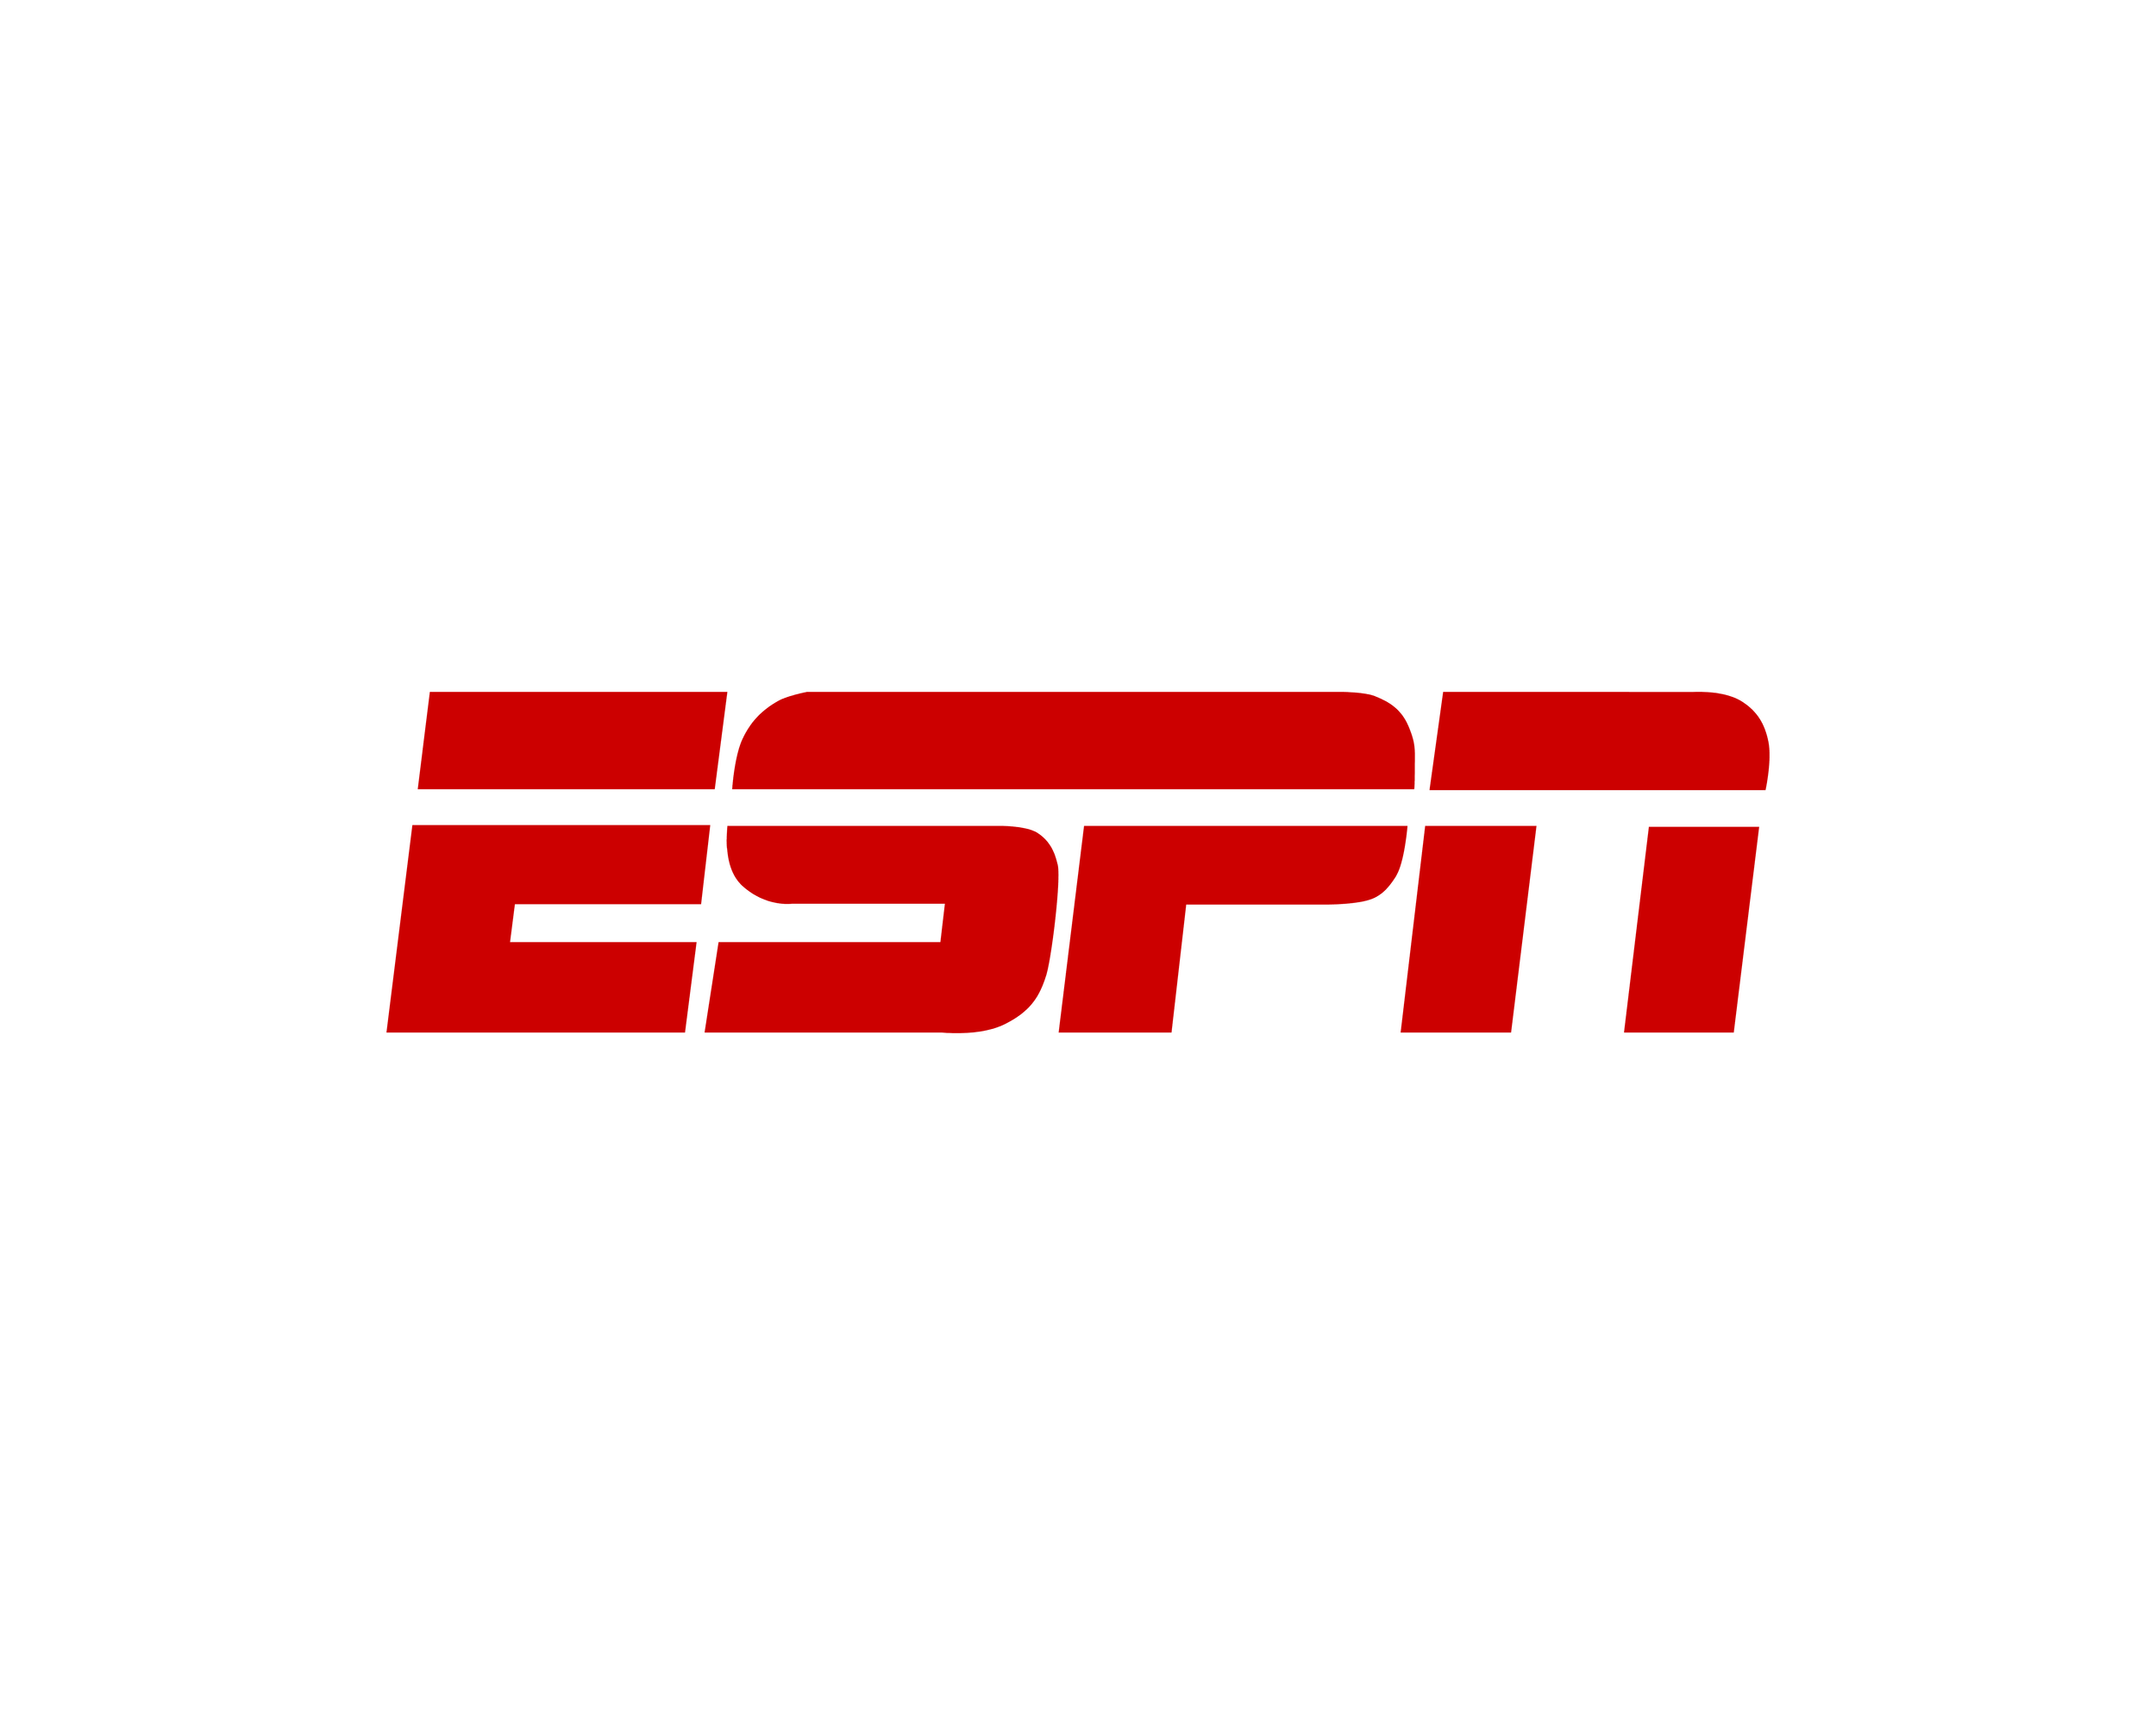 ESPN-logo.png